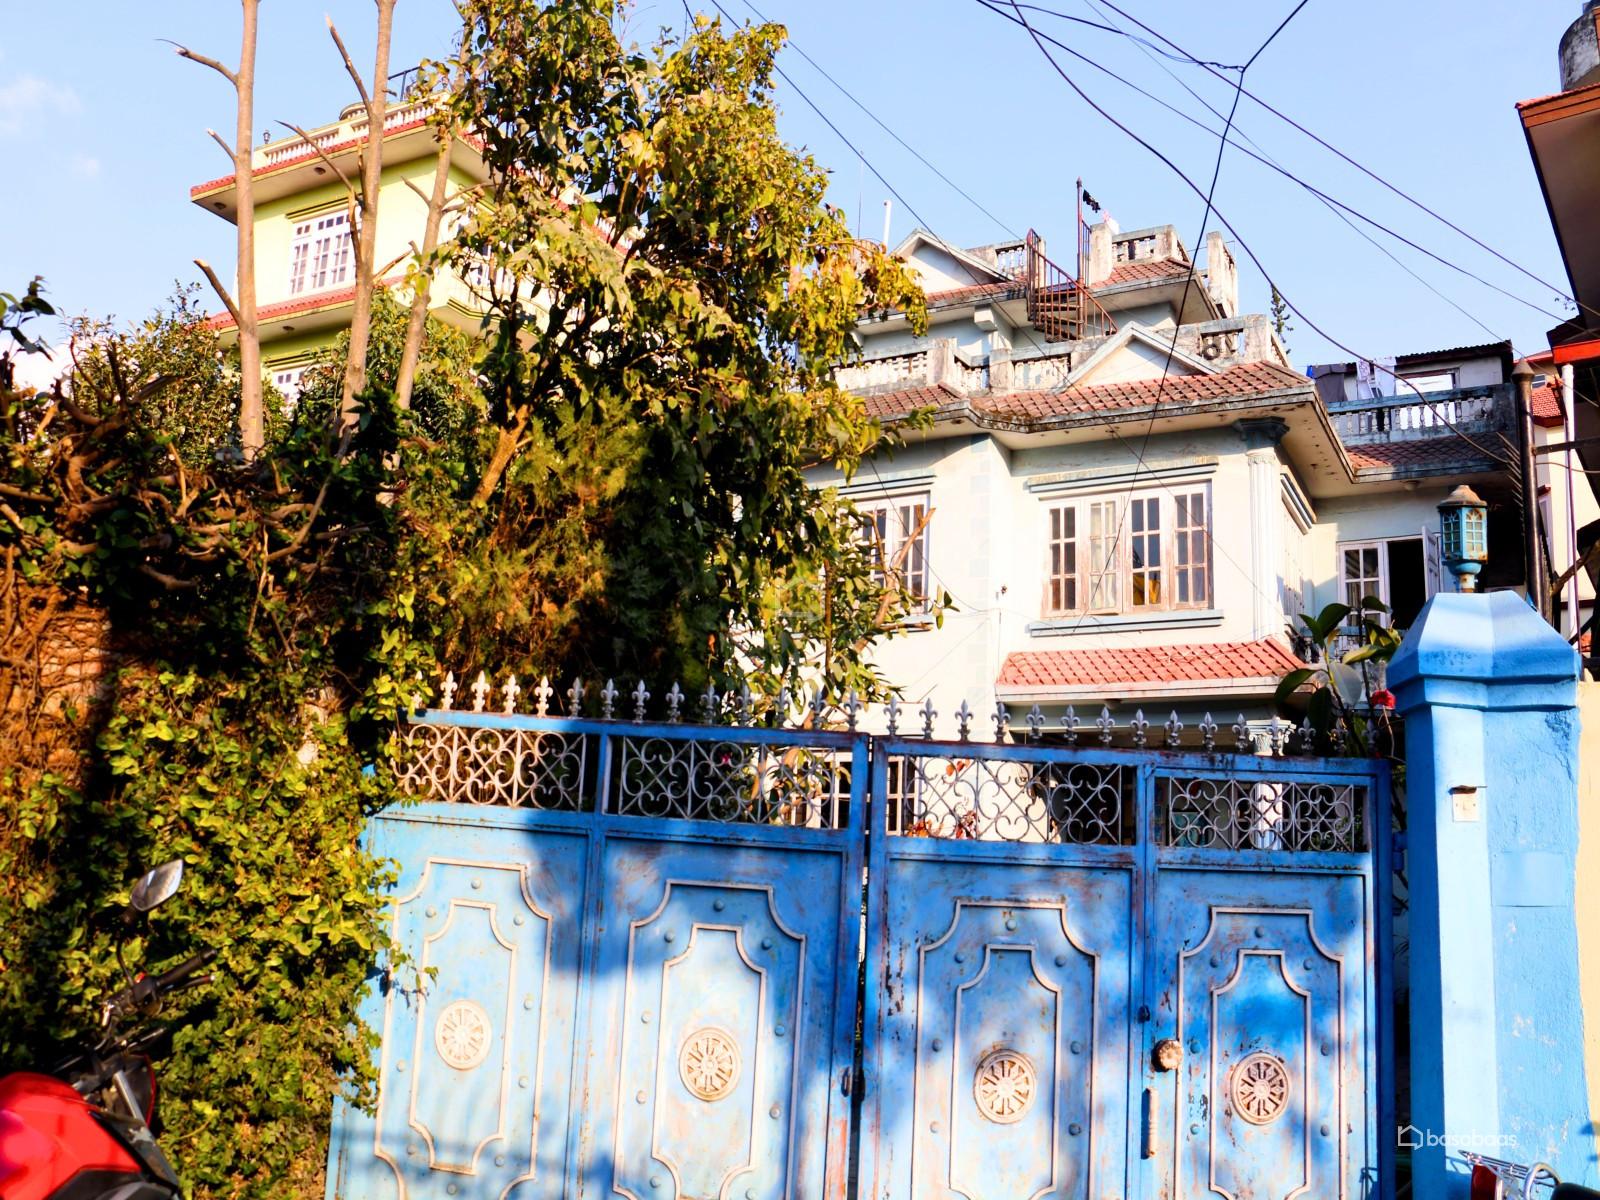 Residential Land : Land for Sale in Hattigauda, Kathmandu Image 1